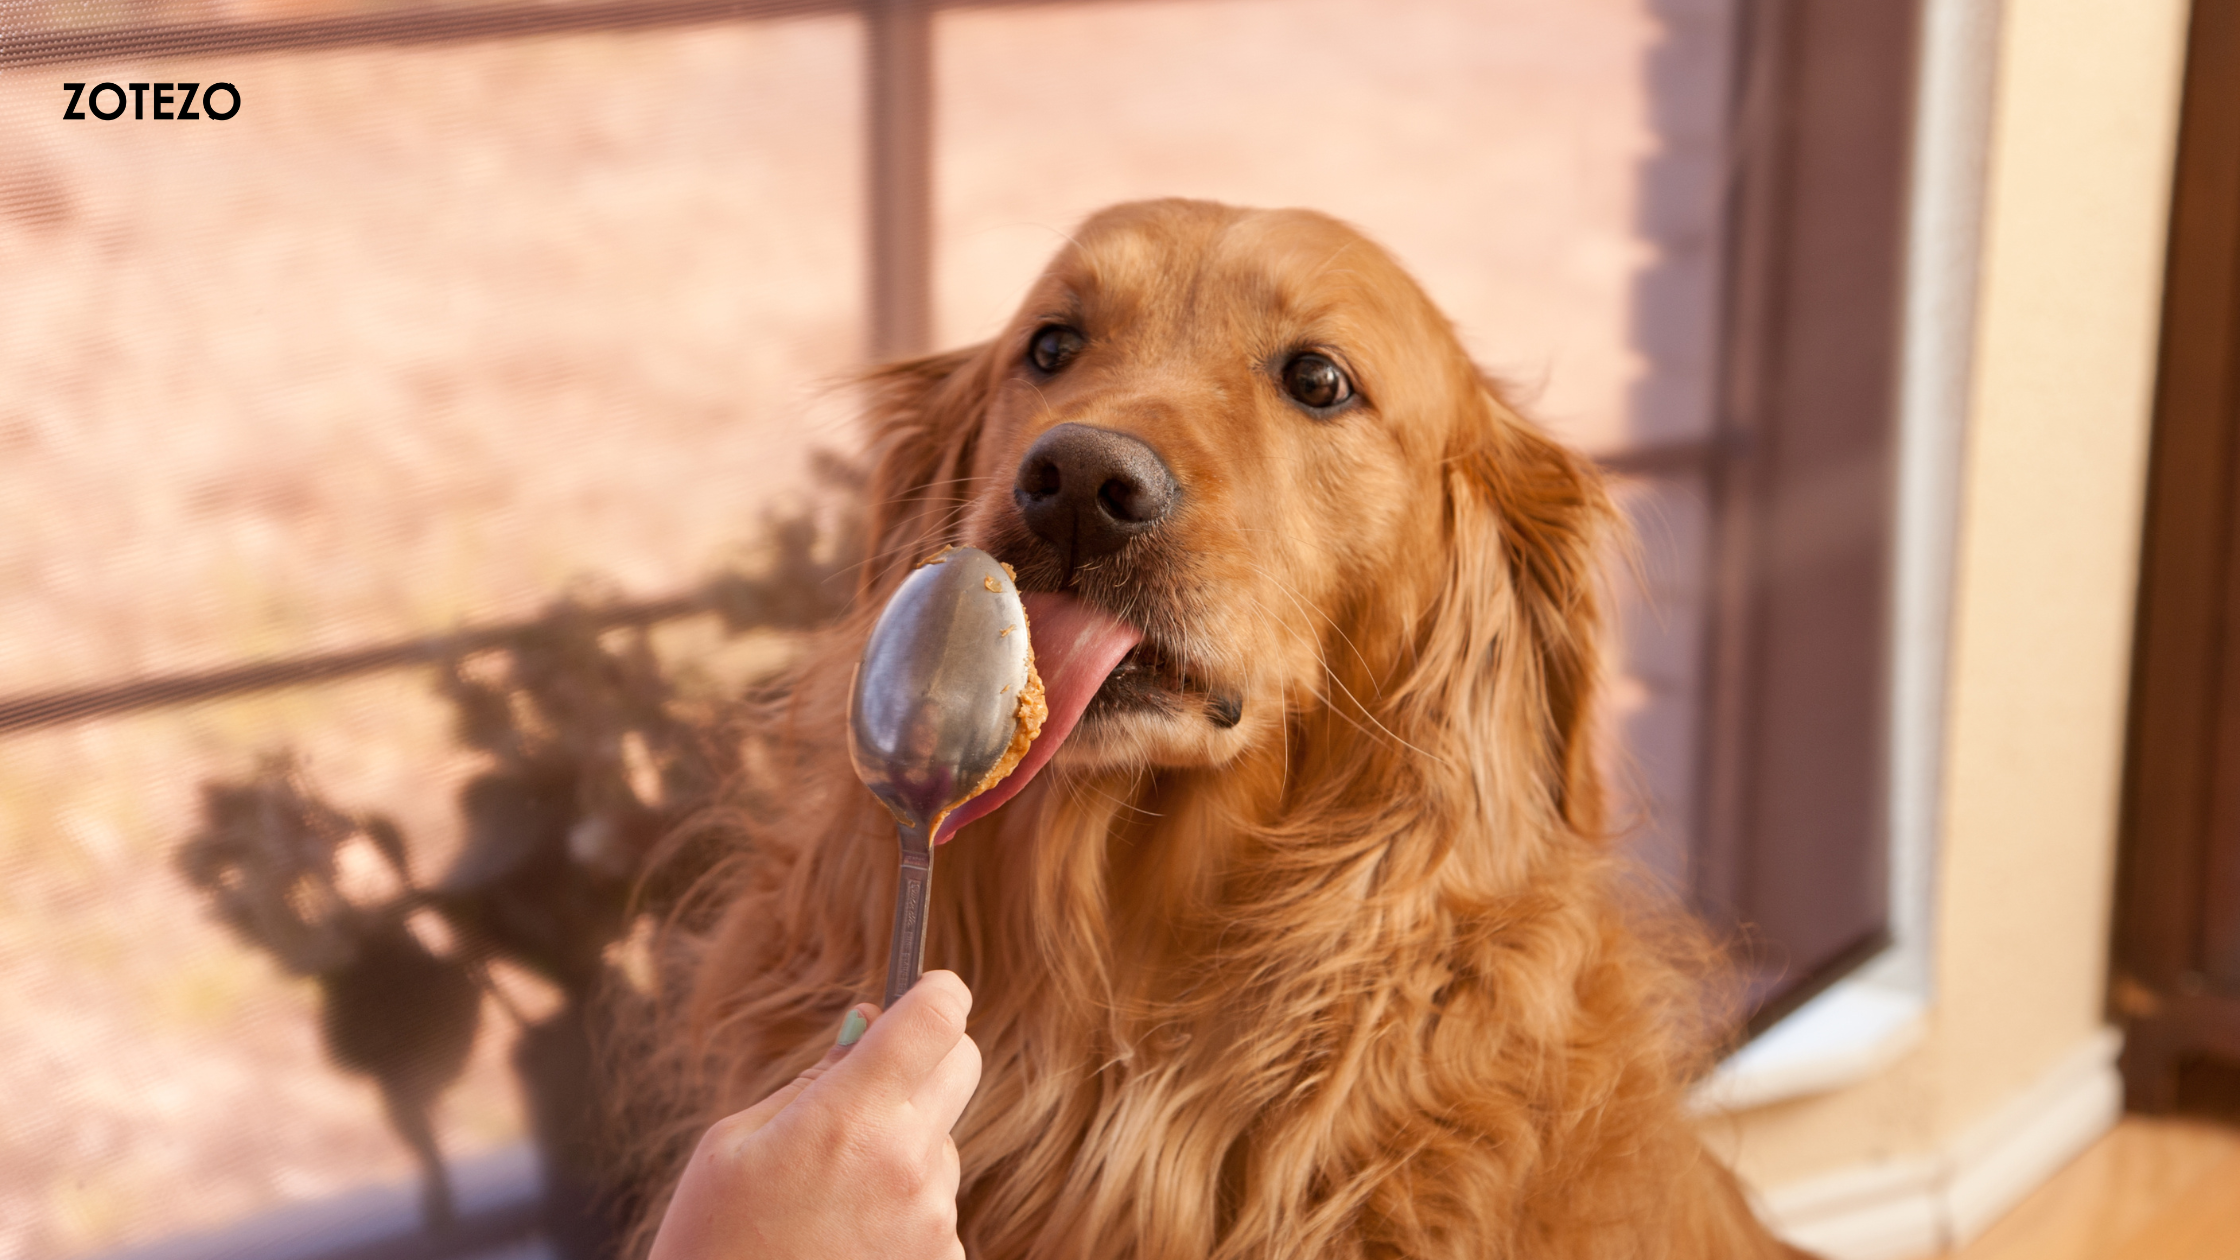 Peanut Butter For Dogs in Australia